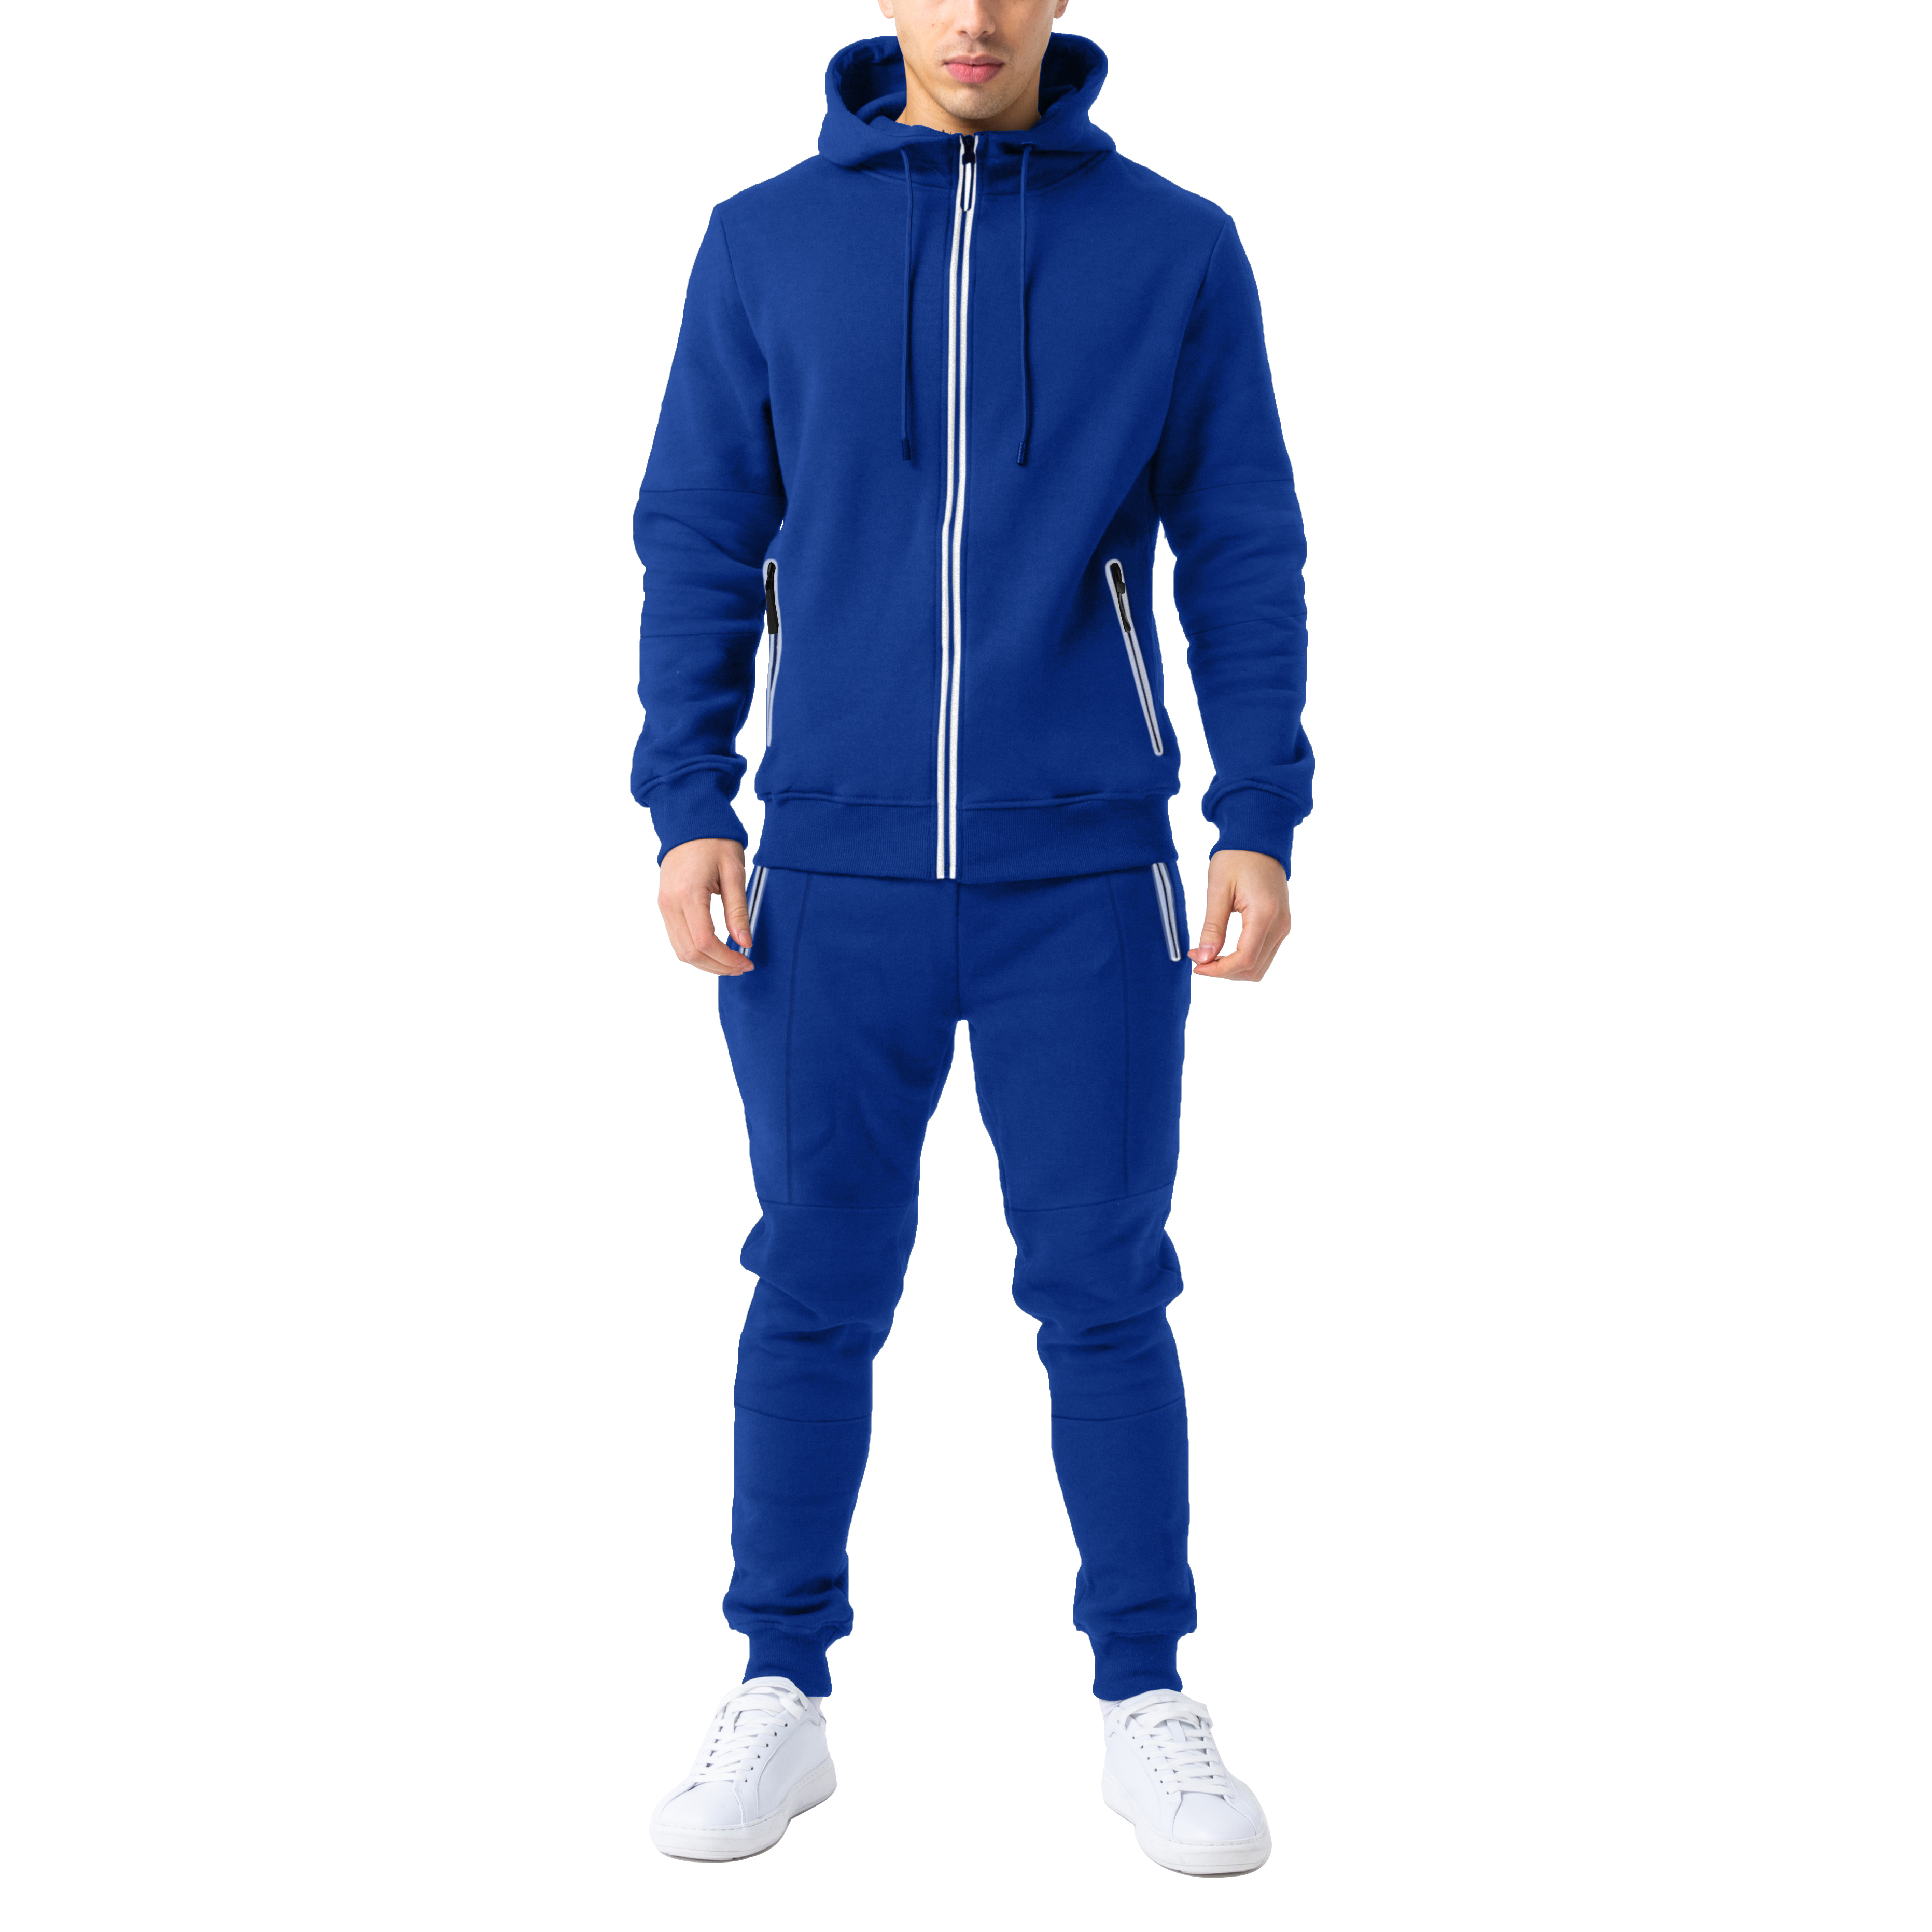 Men's Stylish Slim Fitting Hoodie & Jogger Set - Blue, Medium